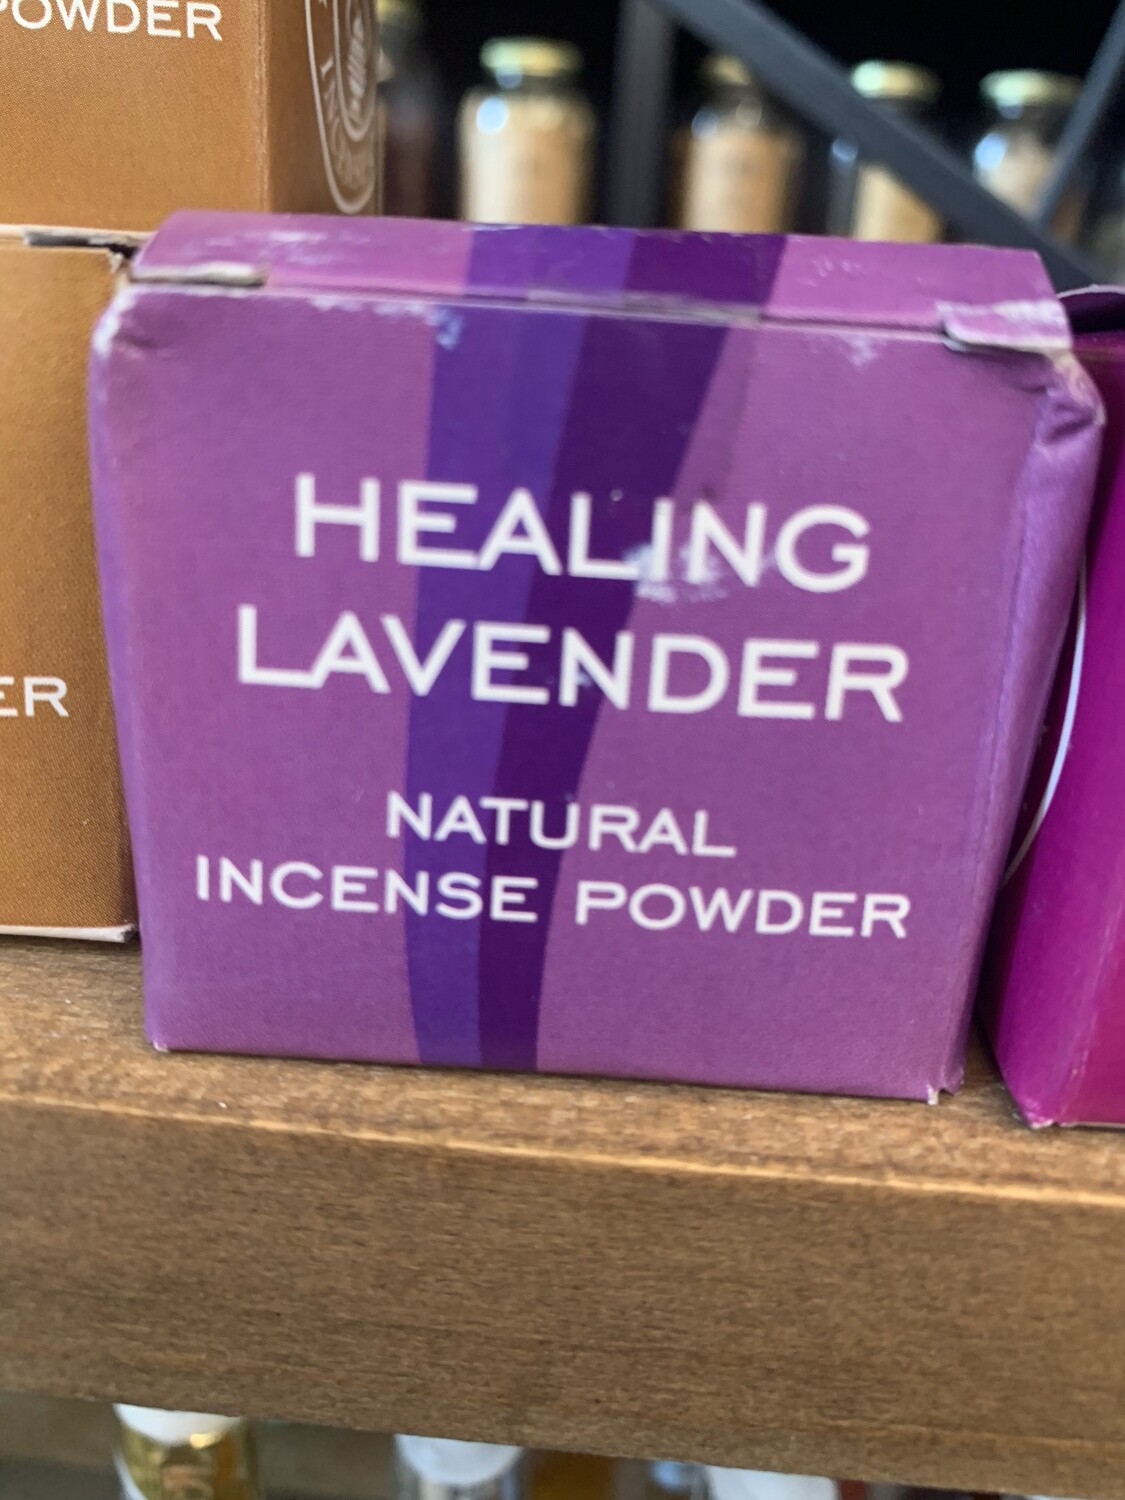 Boxed Incense Powder Healing Lavender